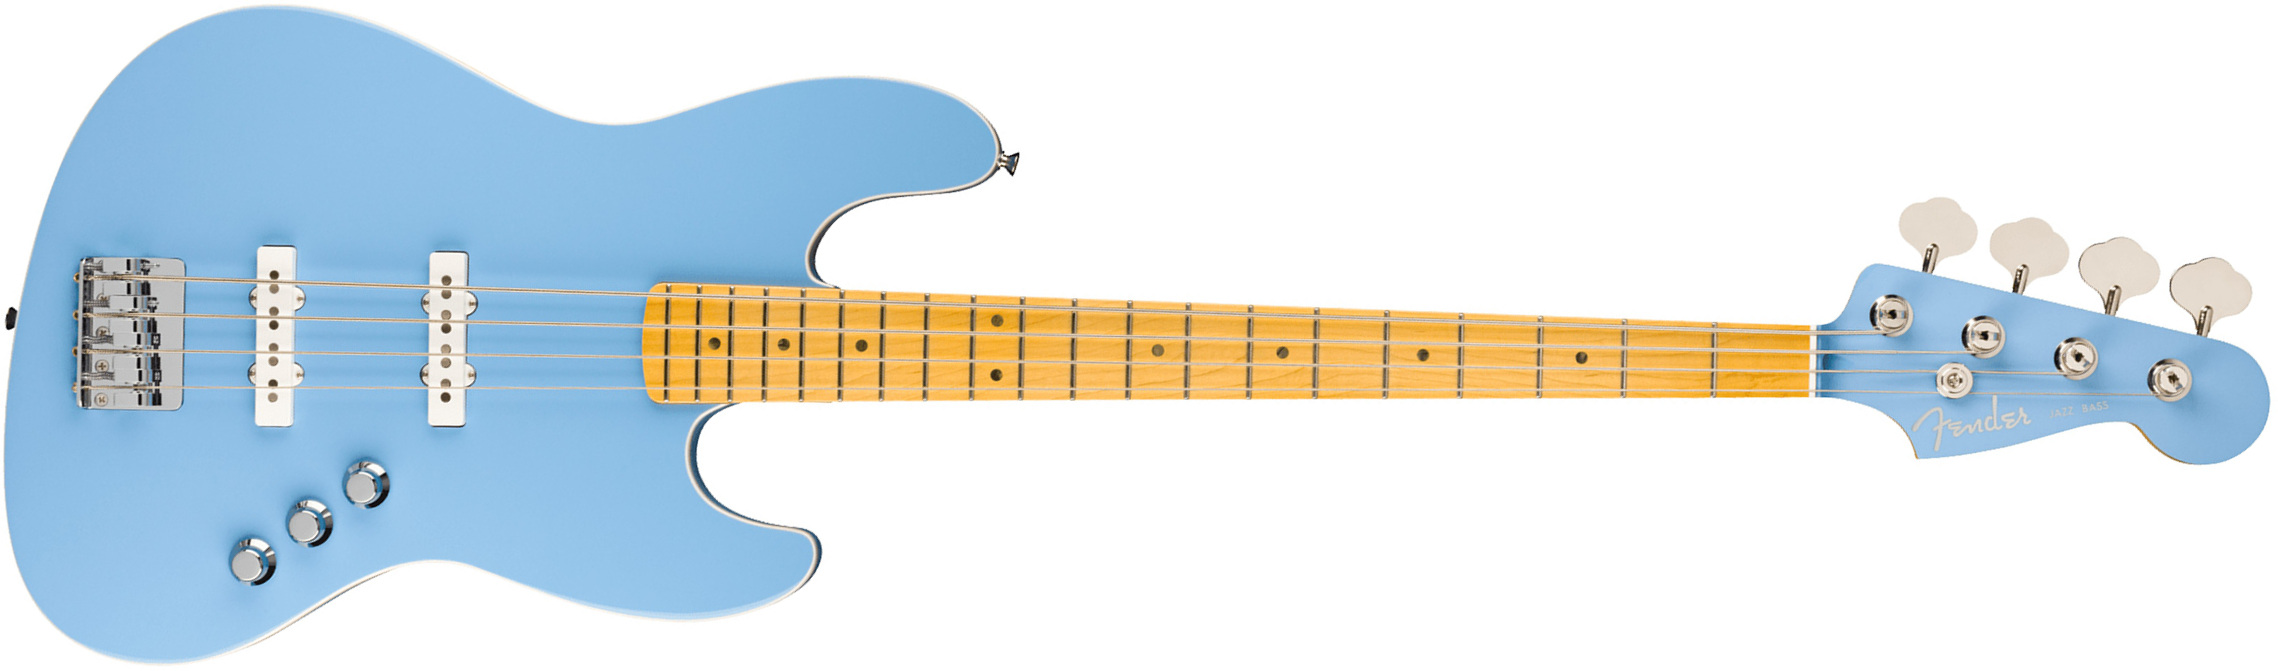 Basse électrique solid body Fender Aerodyne Special Jazz Bass (Japan, MN) - California blue